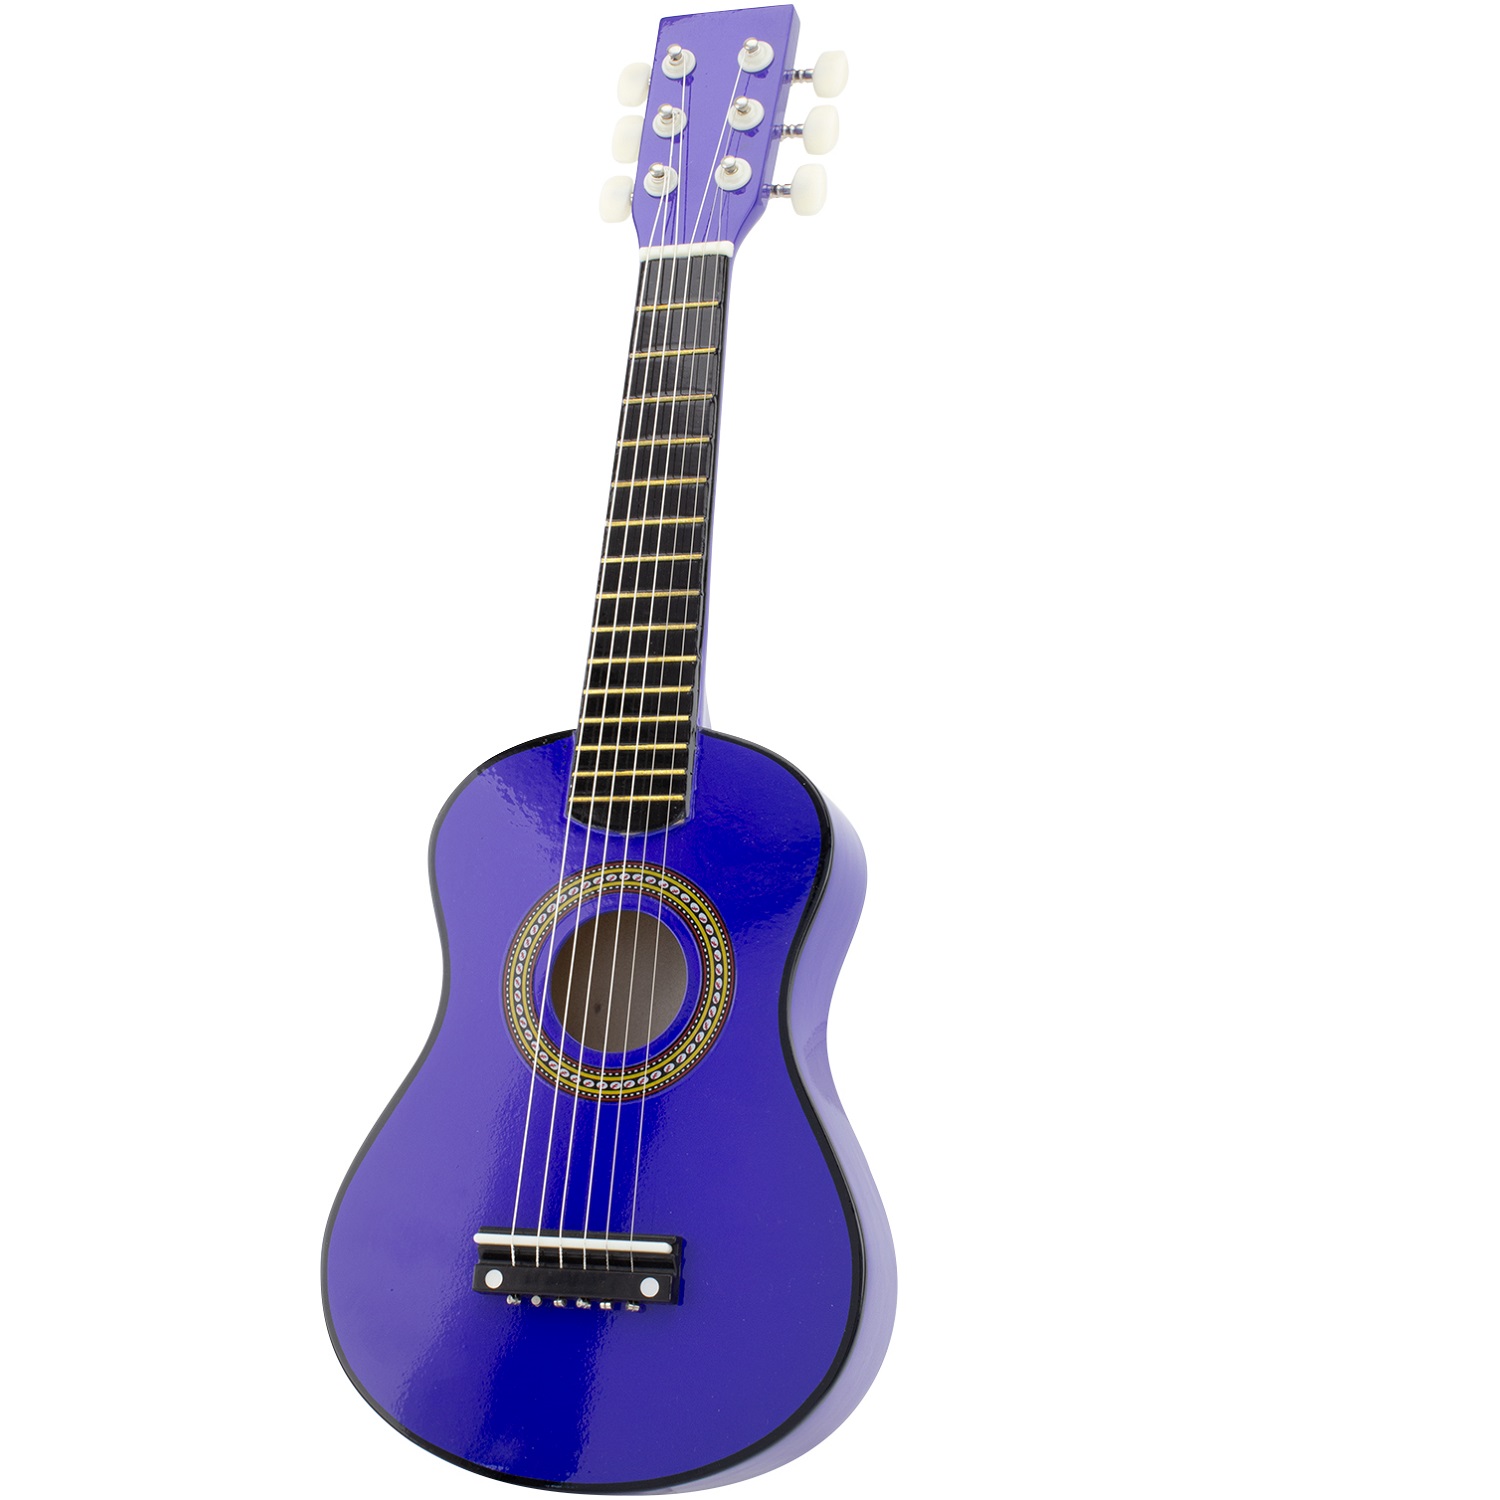 Guitare bleue